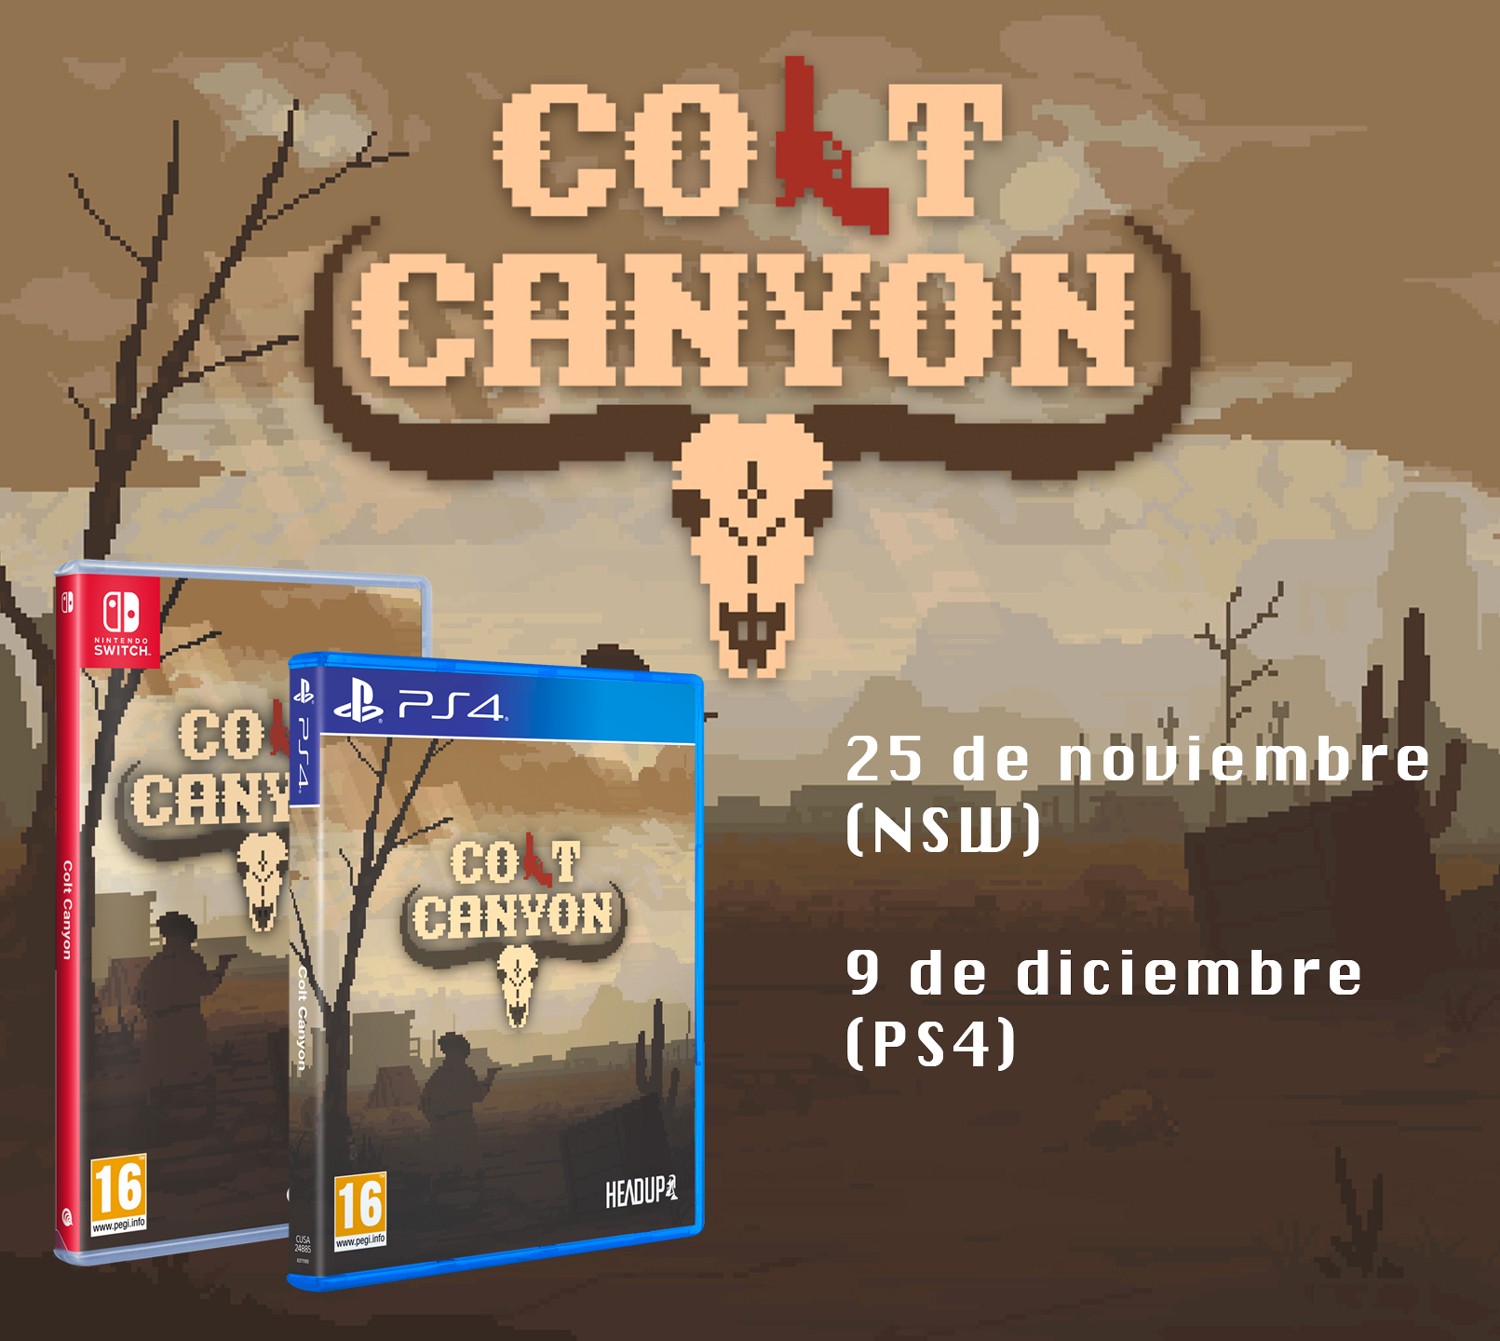 Selecta Play traerá Colt Canyon para Nintendo Switch y PS4